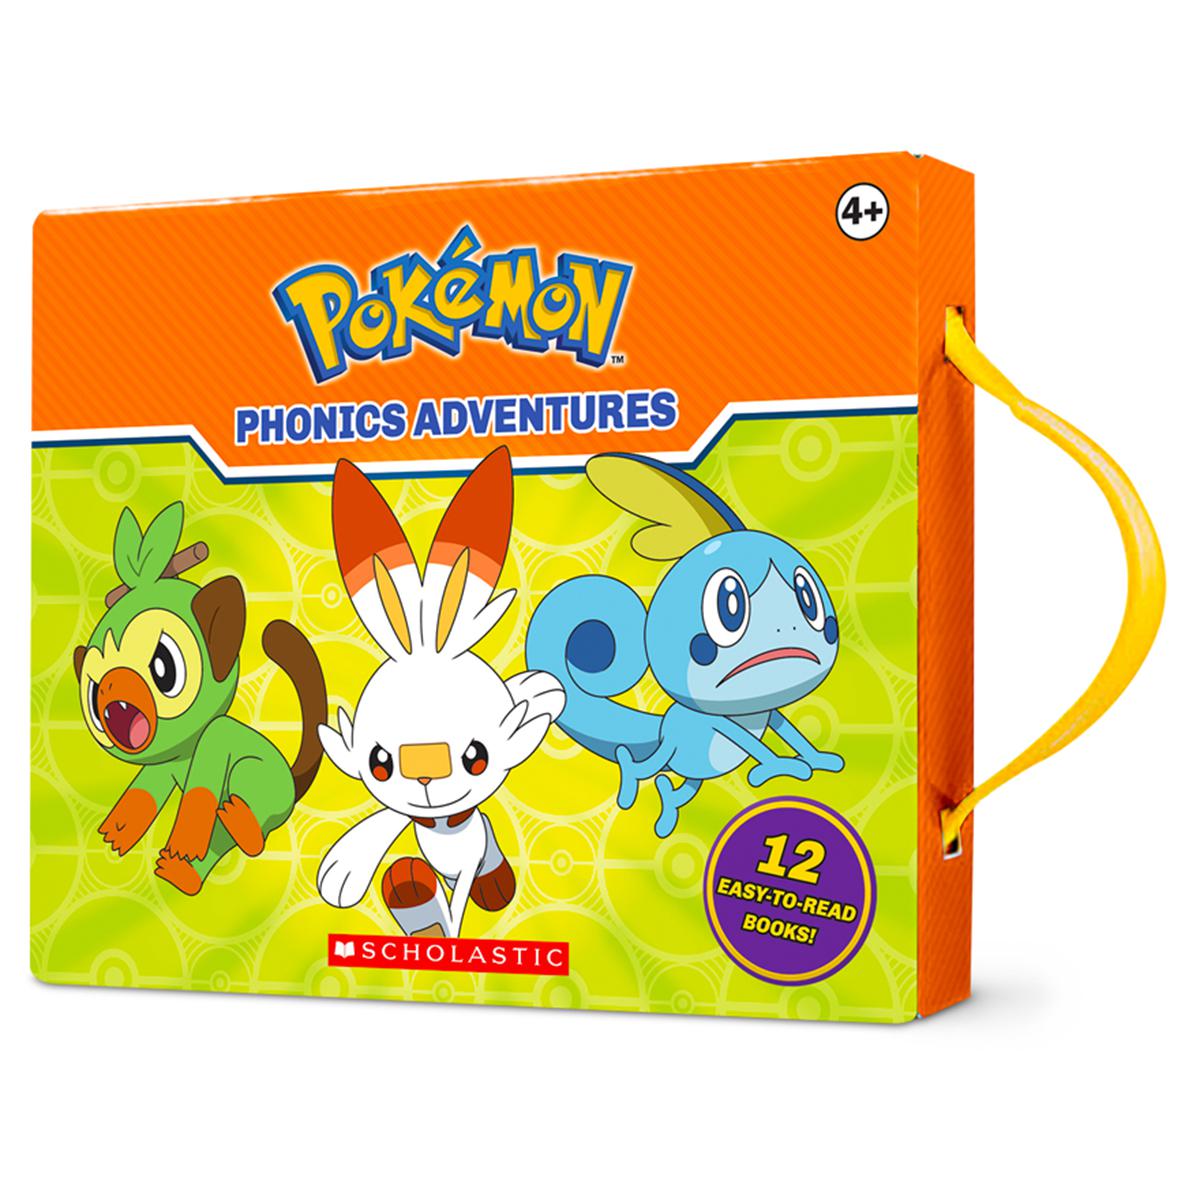  Pokémon: Phonics Adventures Boxed Set 